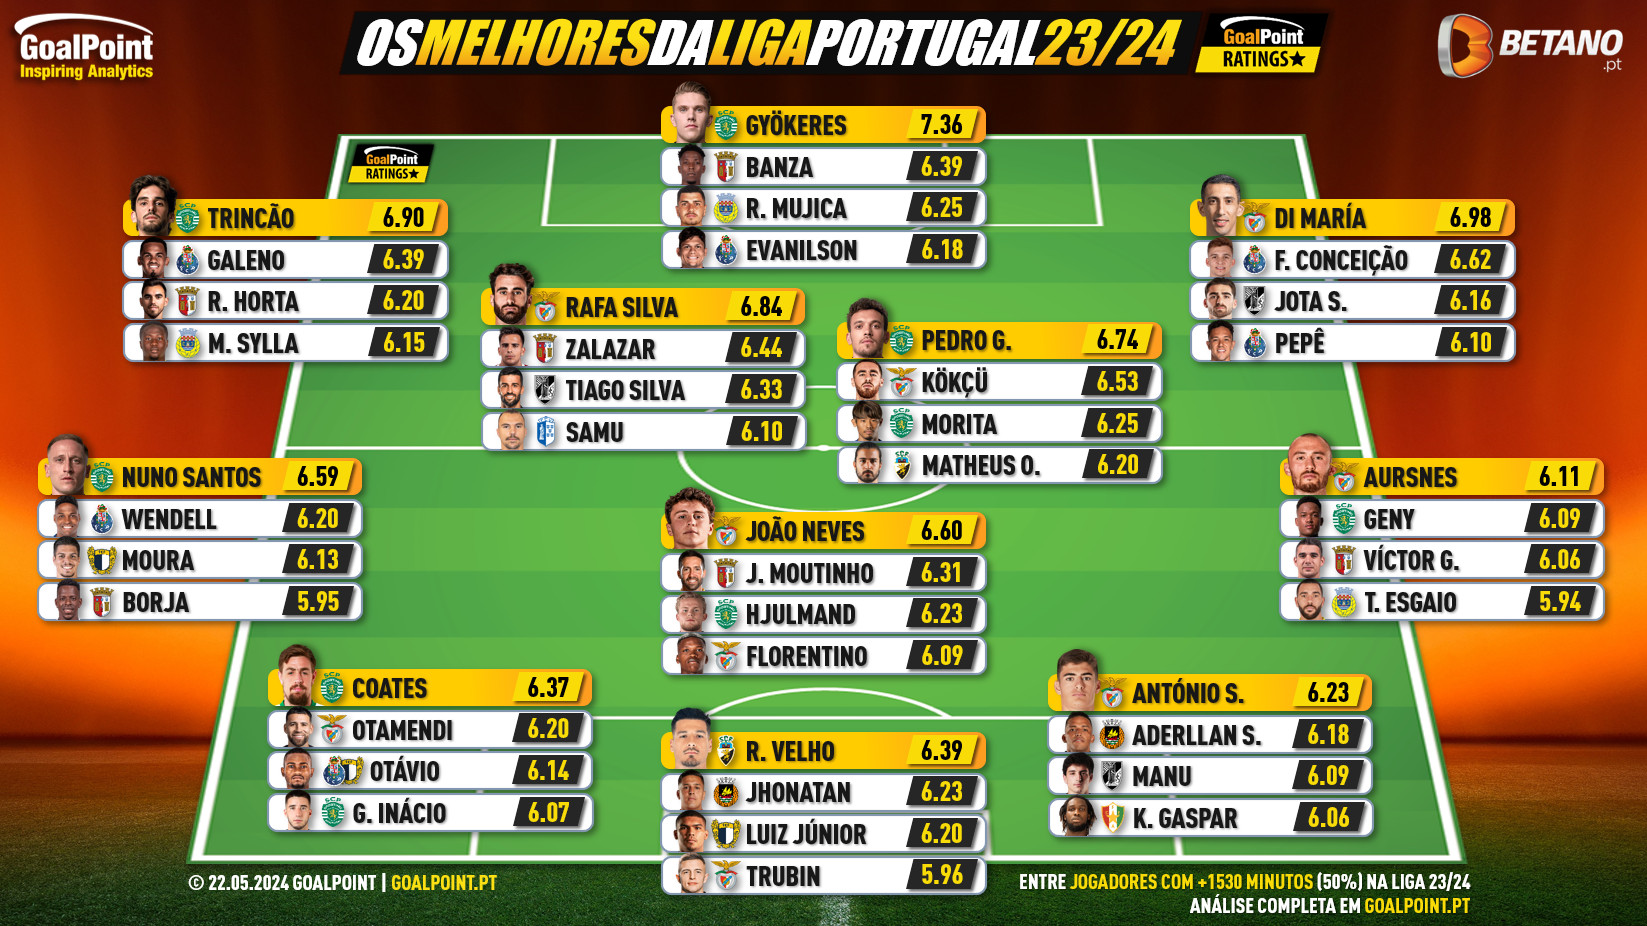 GoalPoint-44-Magnificos-Liga-Portugal-202324-infog